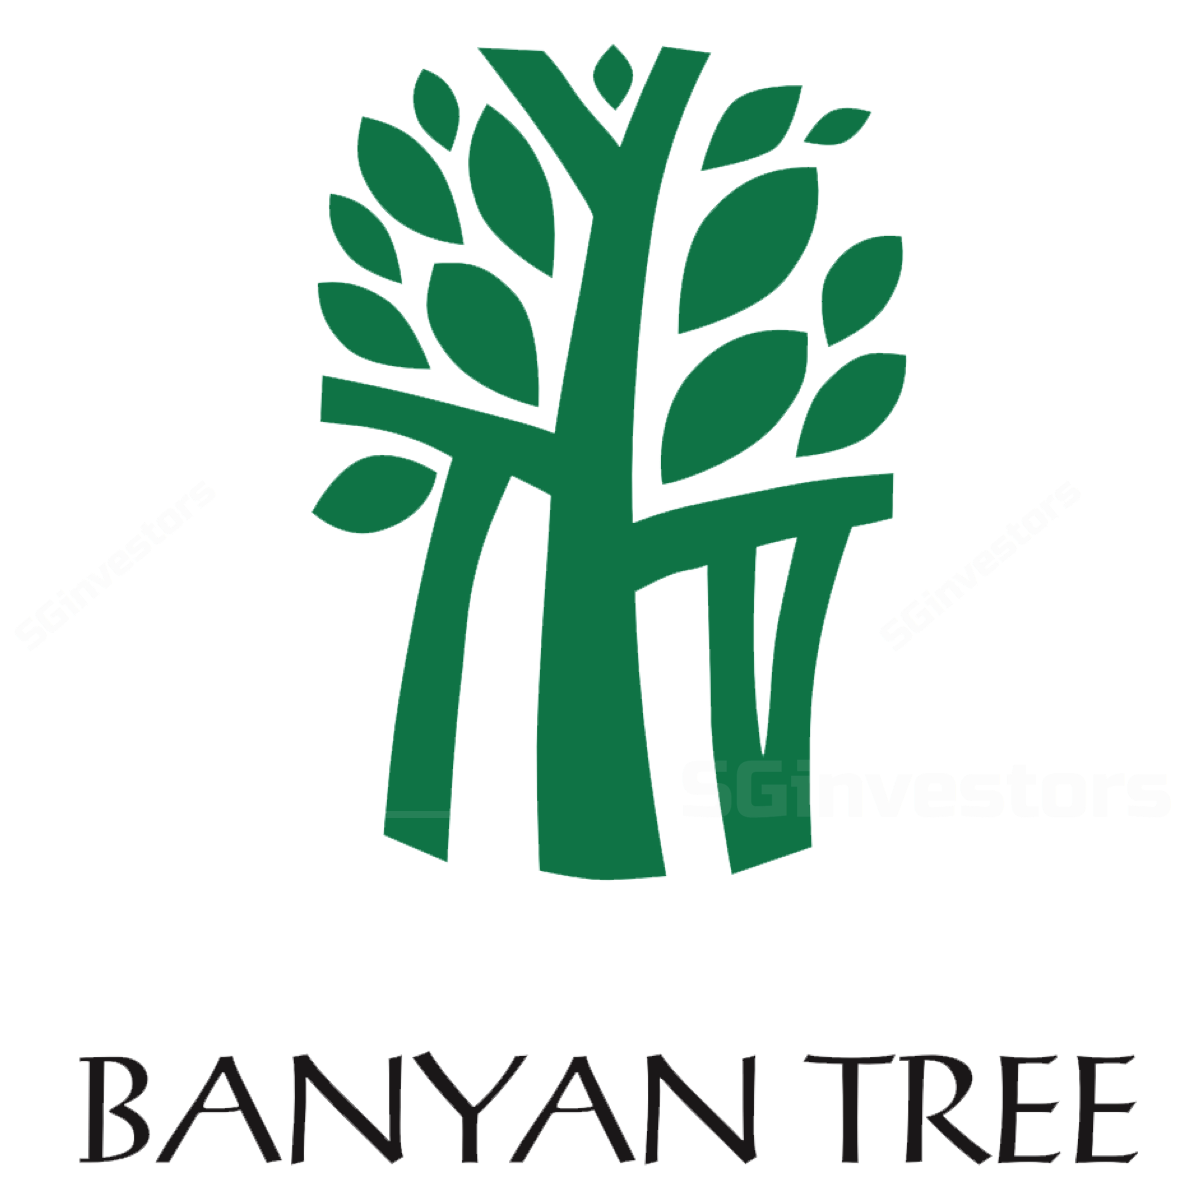 Banyan-Tree-Logo-Transparence-e1508810247134